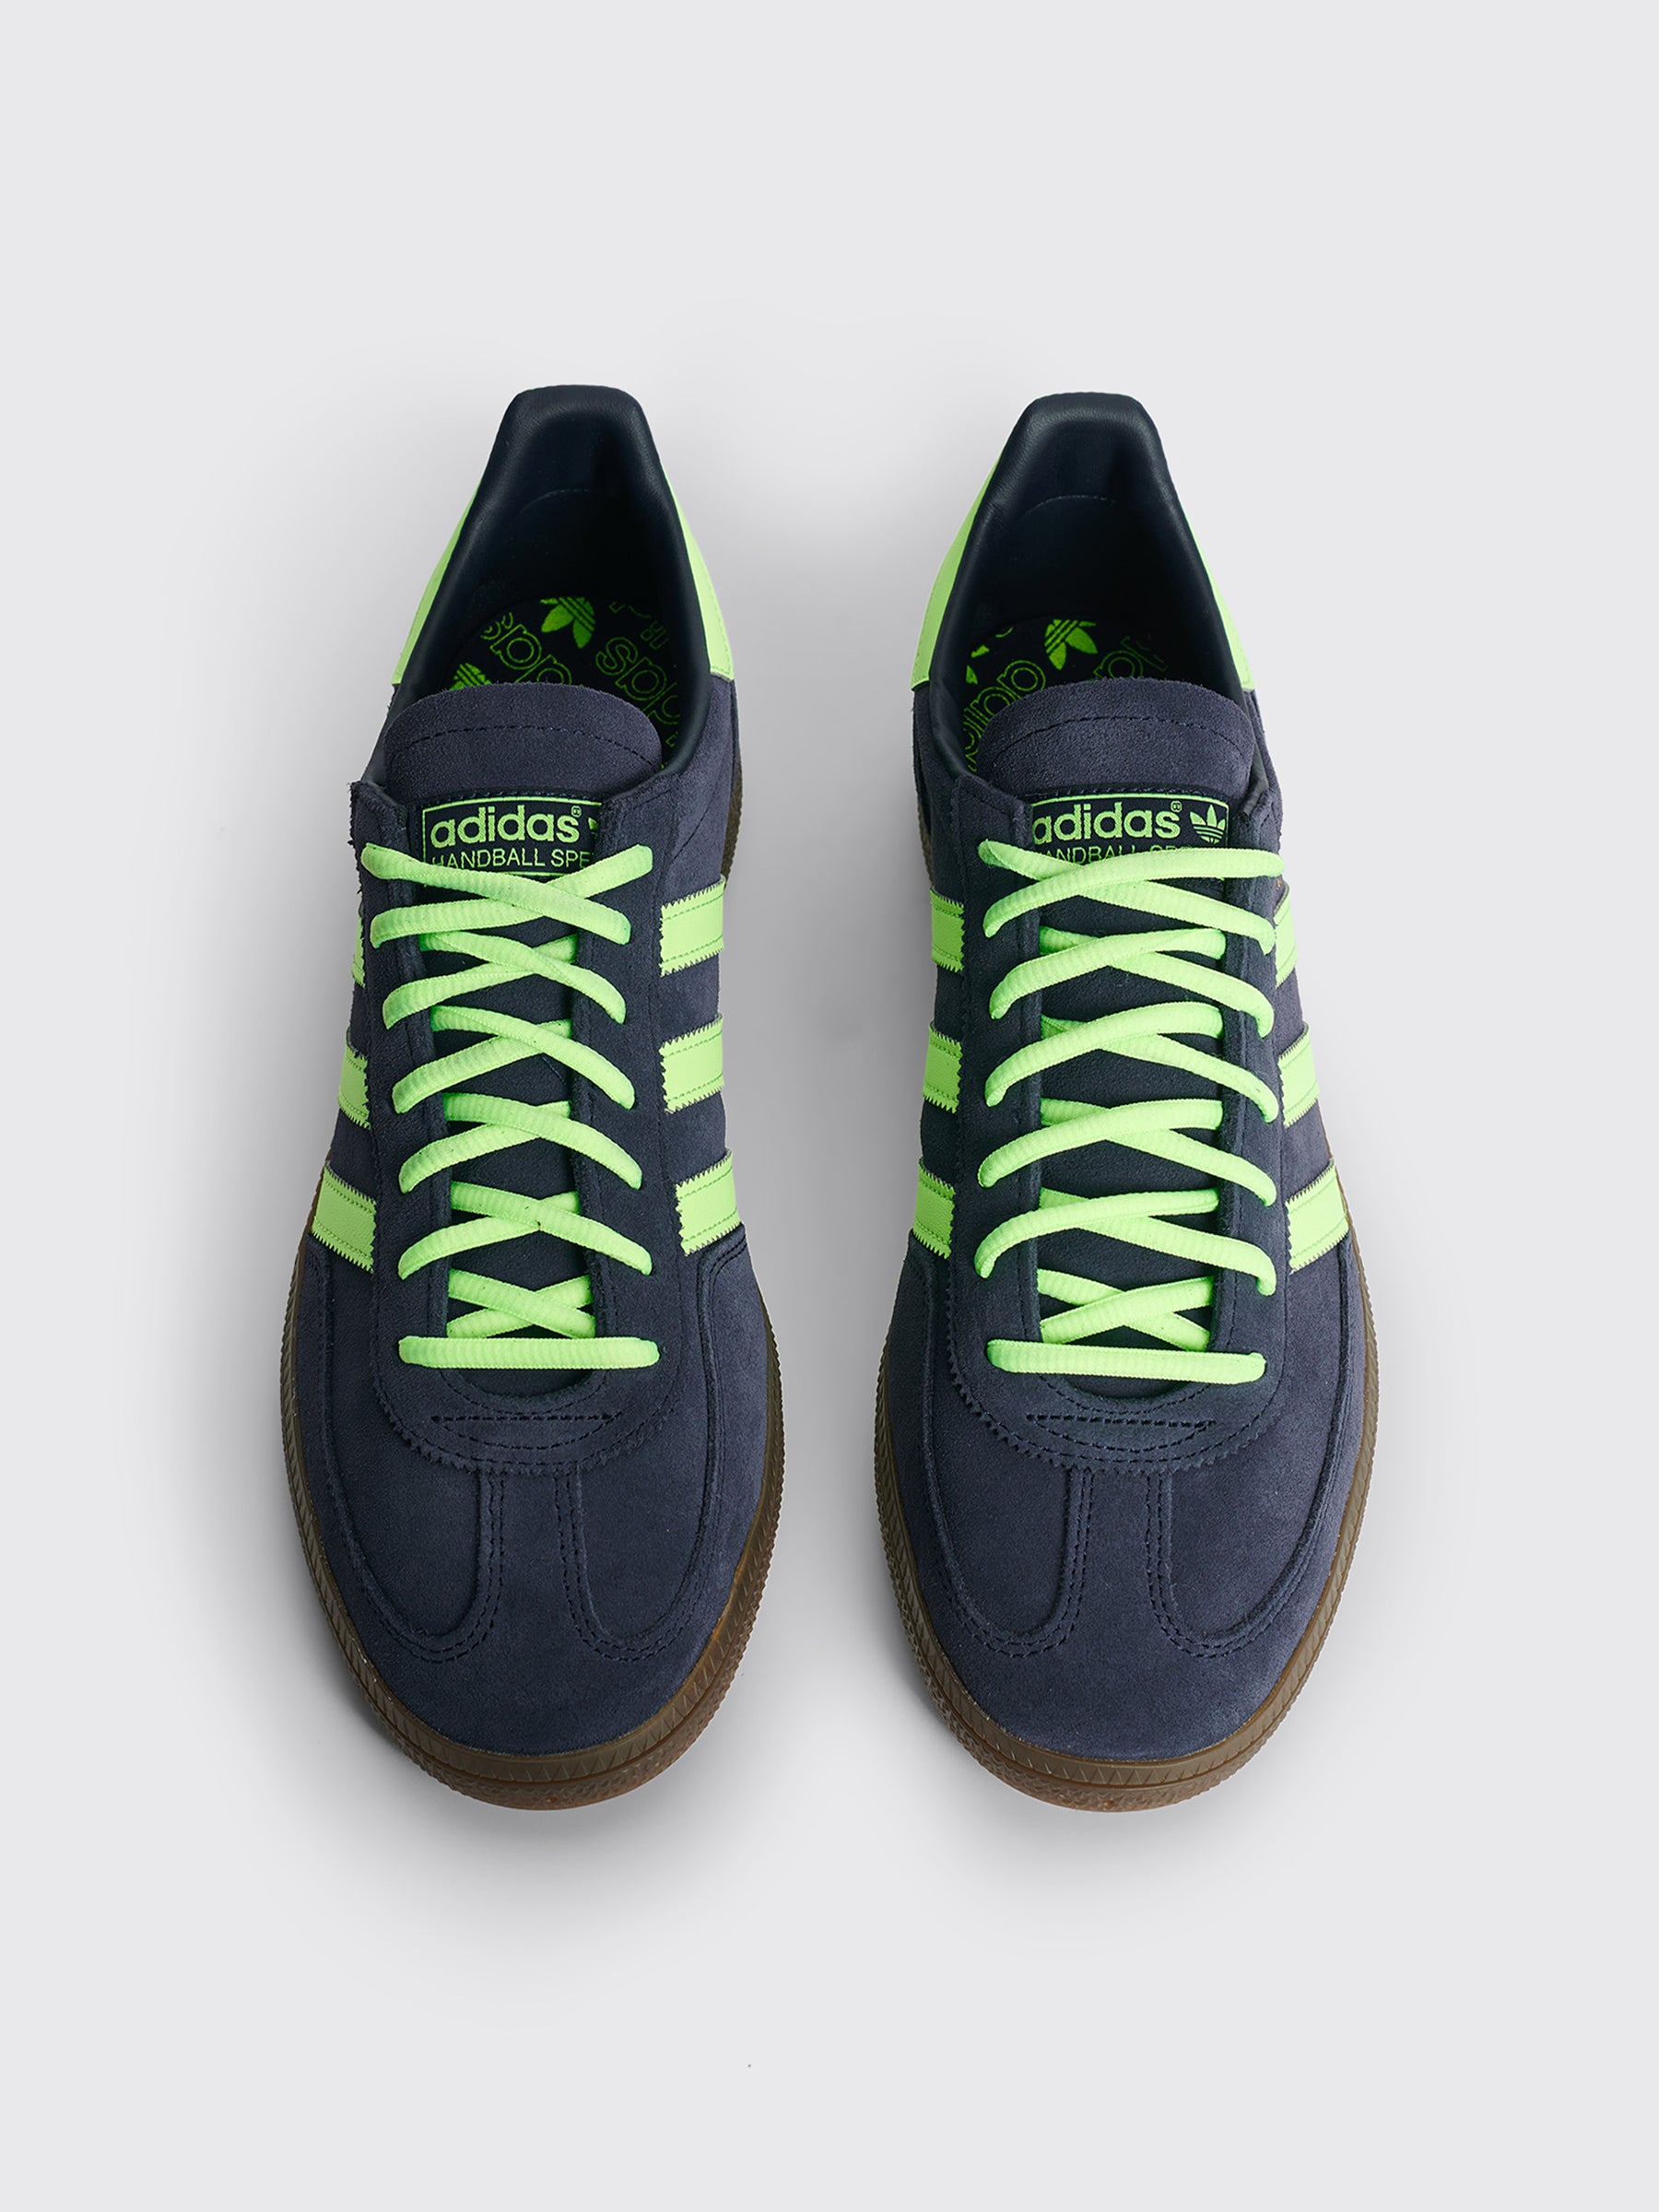 adidas Originals Handball Spezial Legend Ink / Green Spark